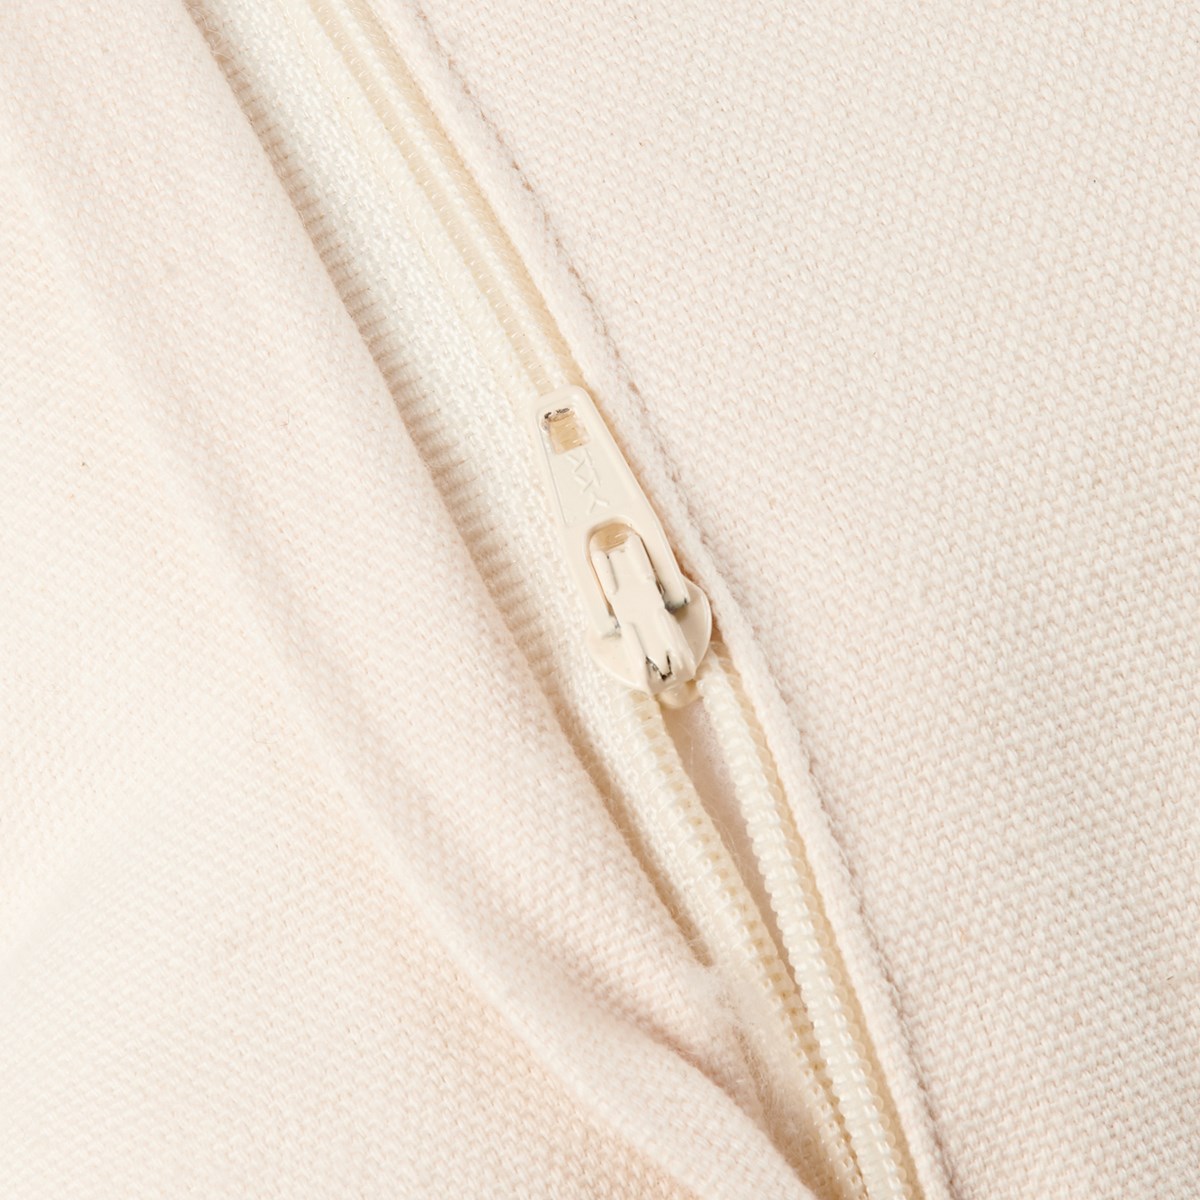 Macrame Fringe Pillow - Cotton, Zipper